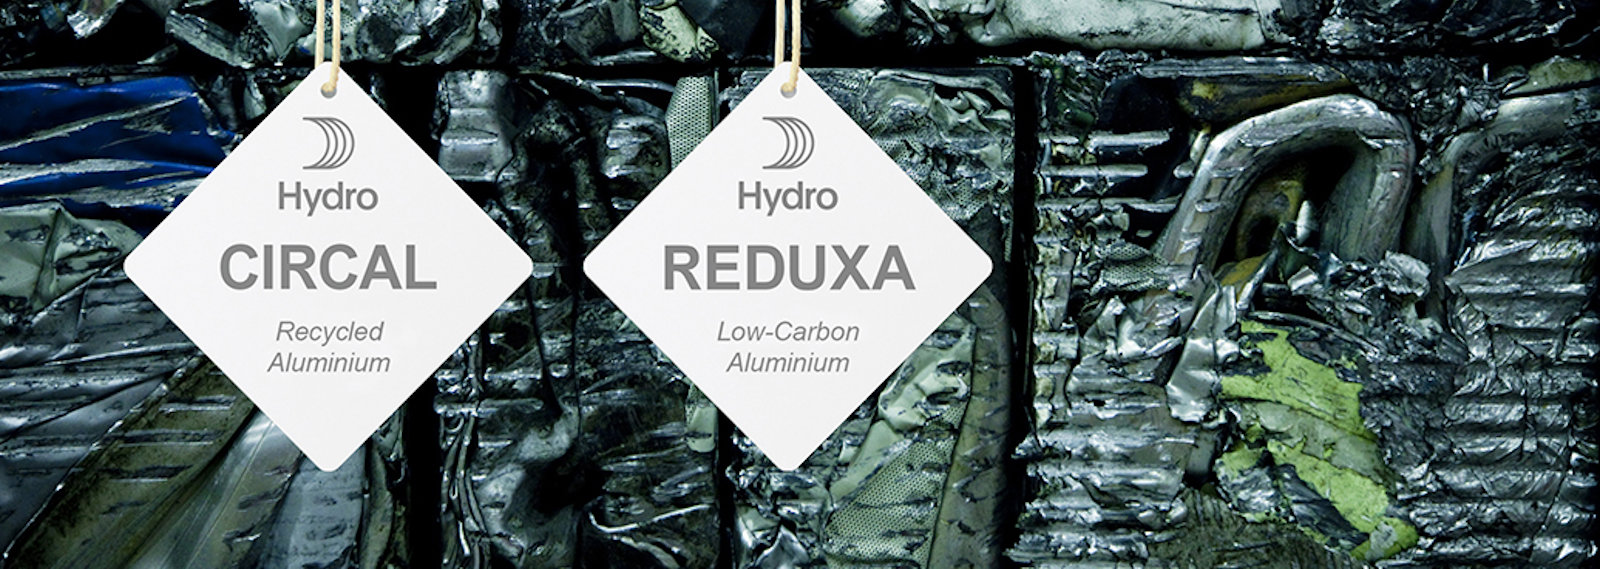 Hydro CIRCAL and Hydro REDUXA hangtags hanging on aluminium scrap